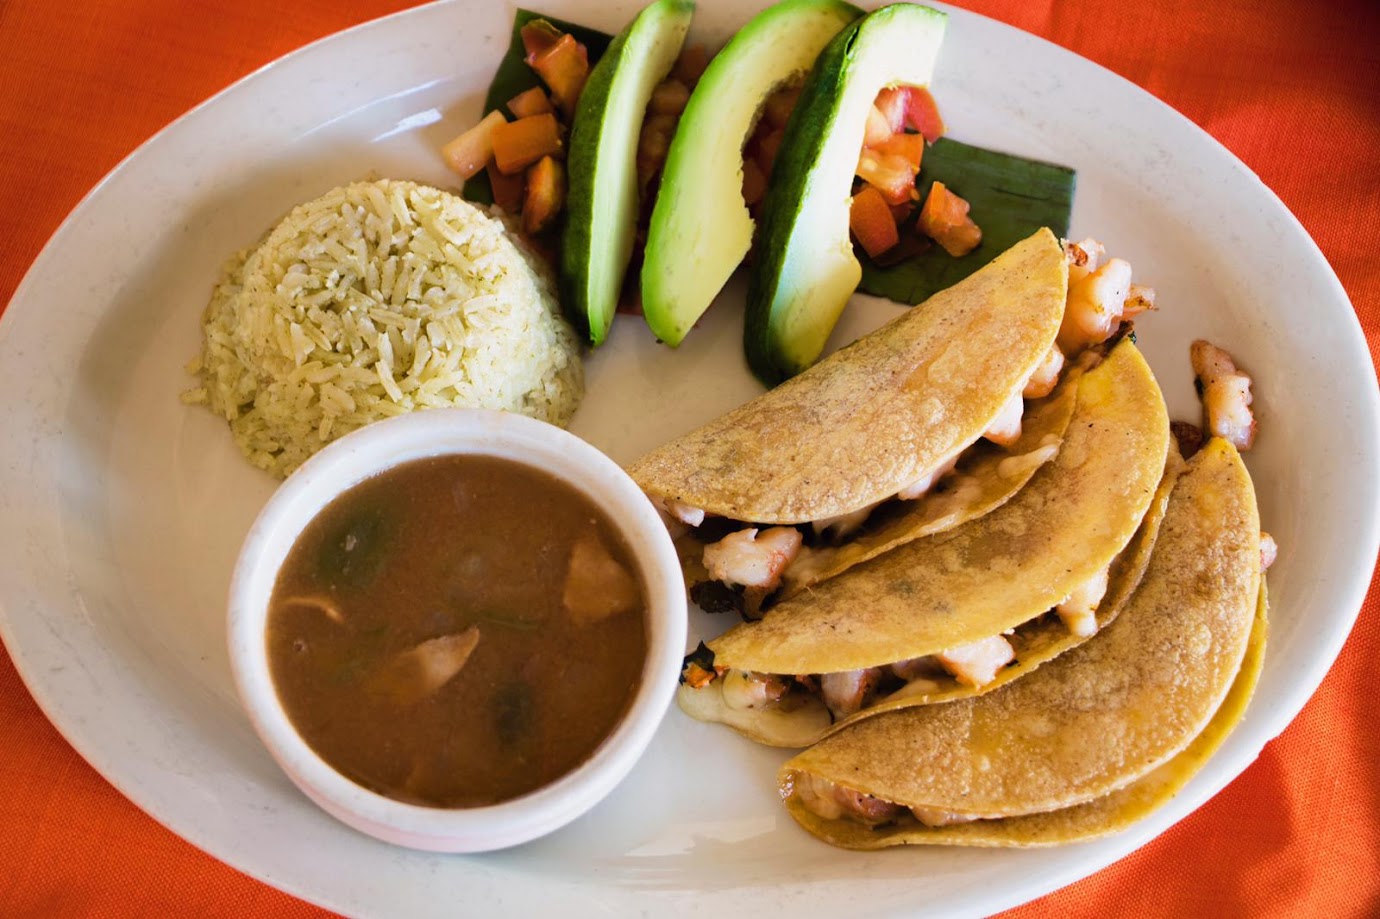 Chepa's Mexican Grill